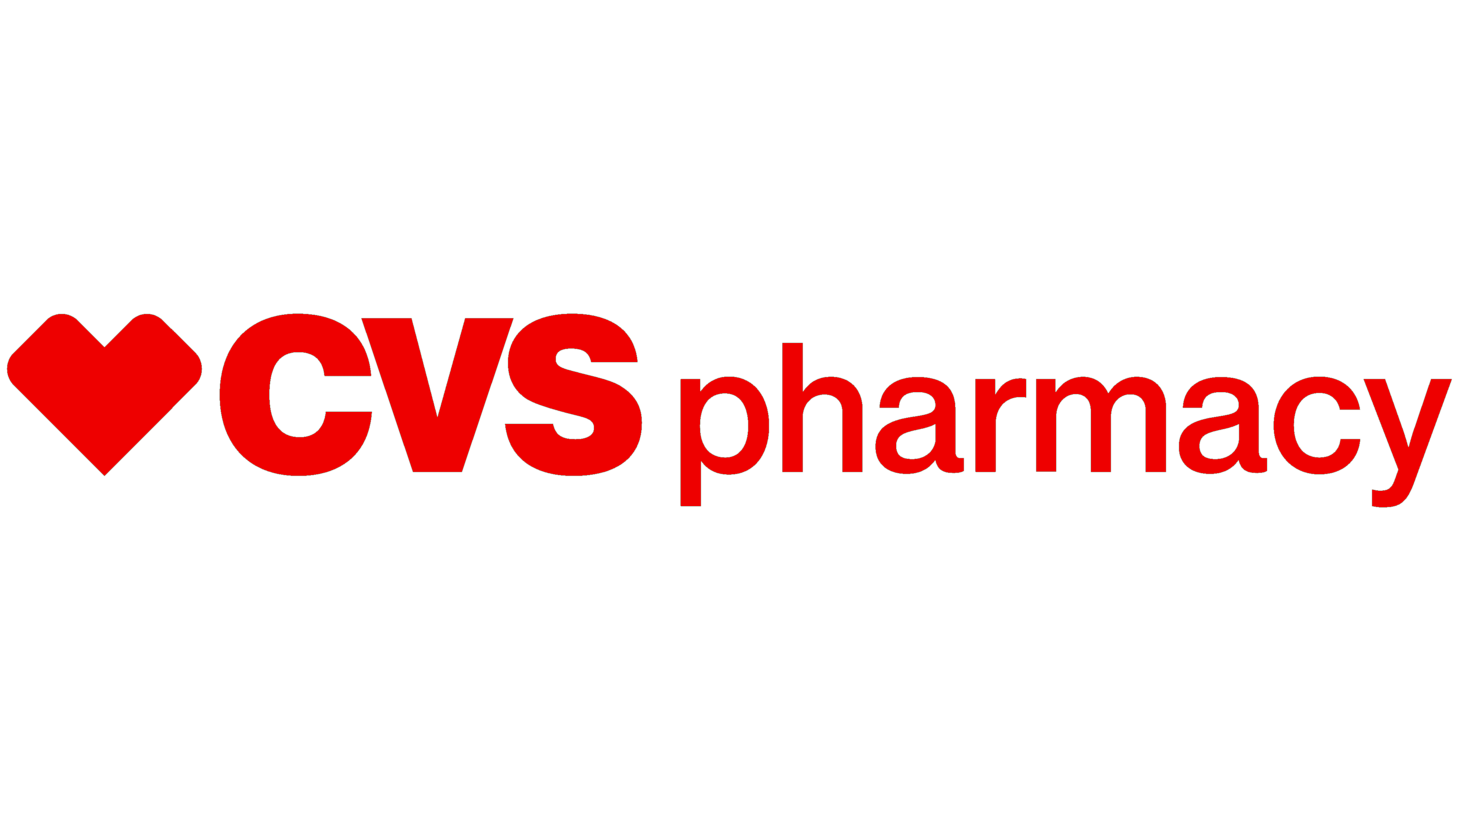 Cvs pharmacy sign 2016 present